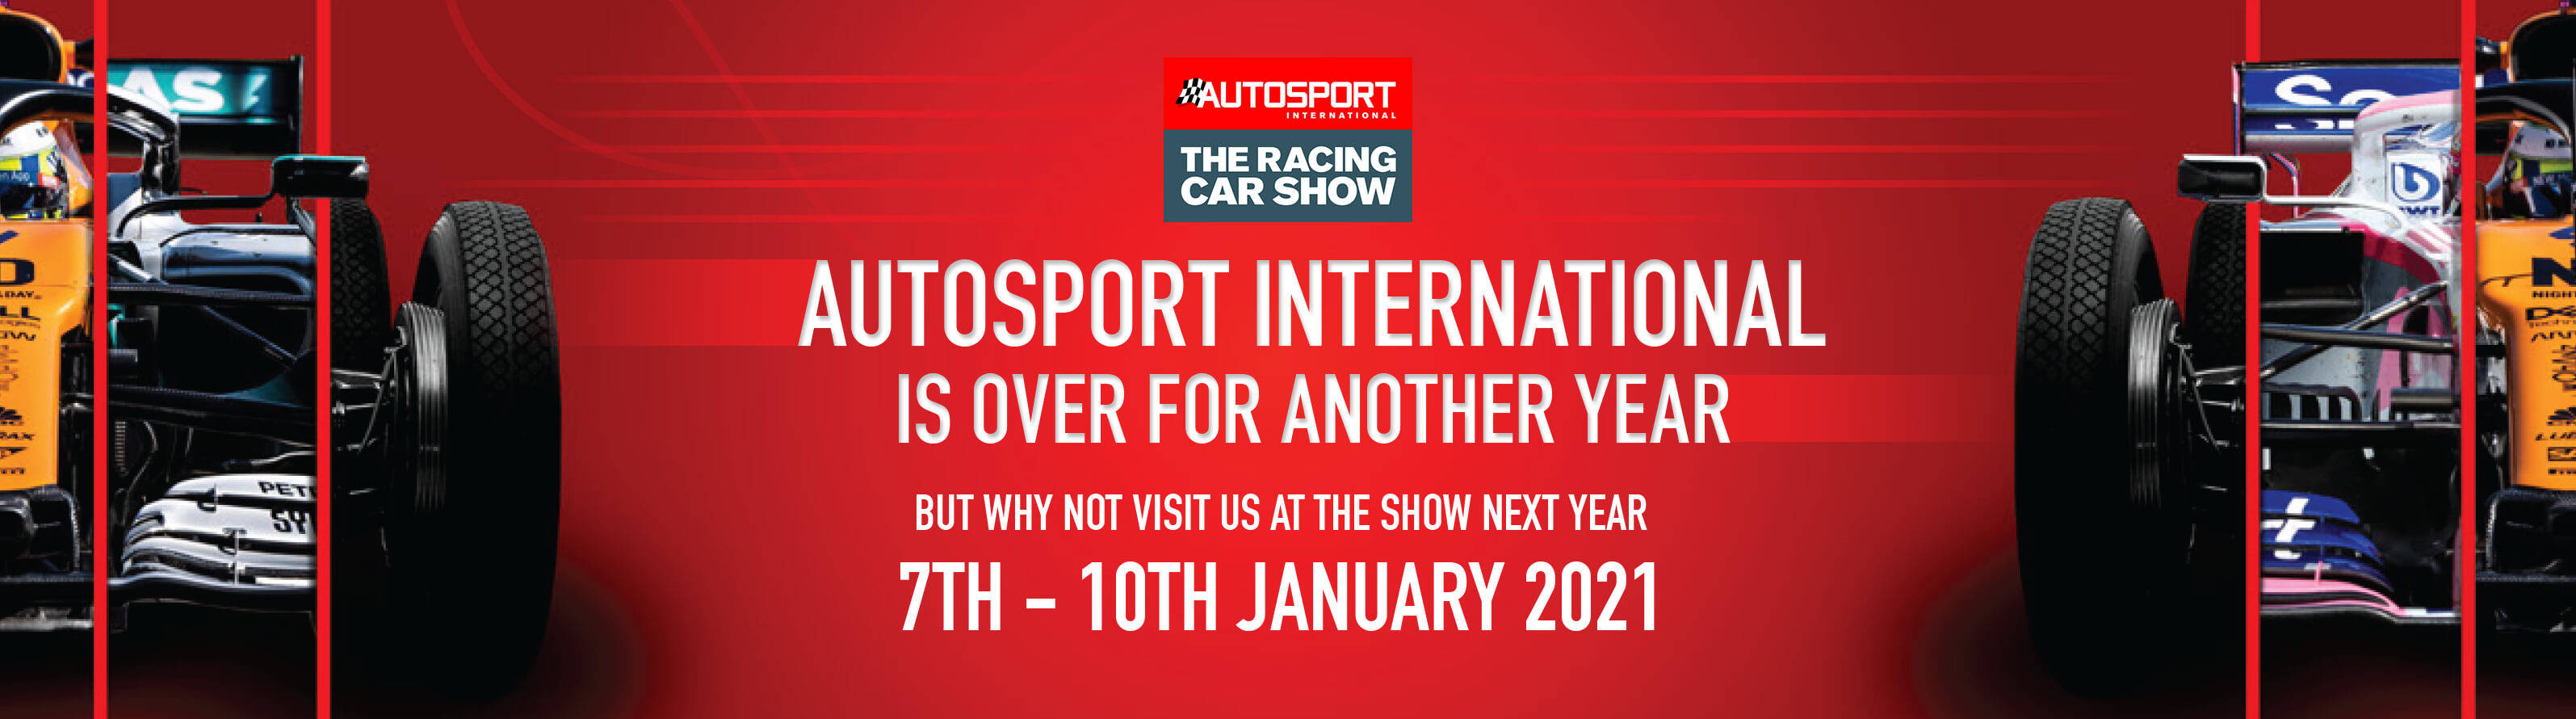 Autosport International